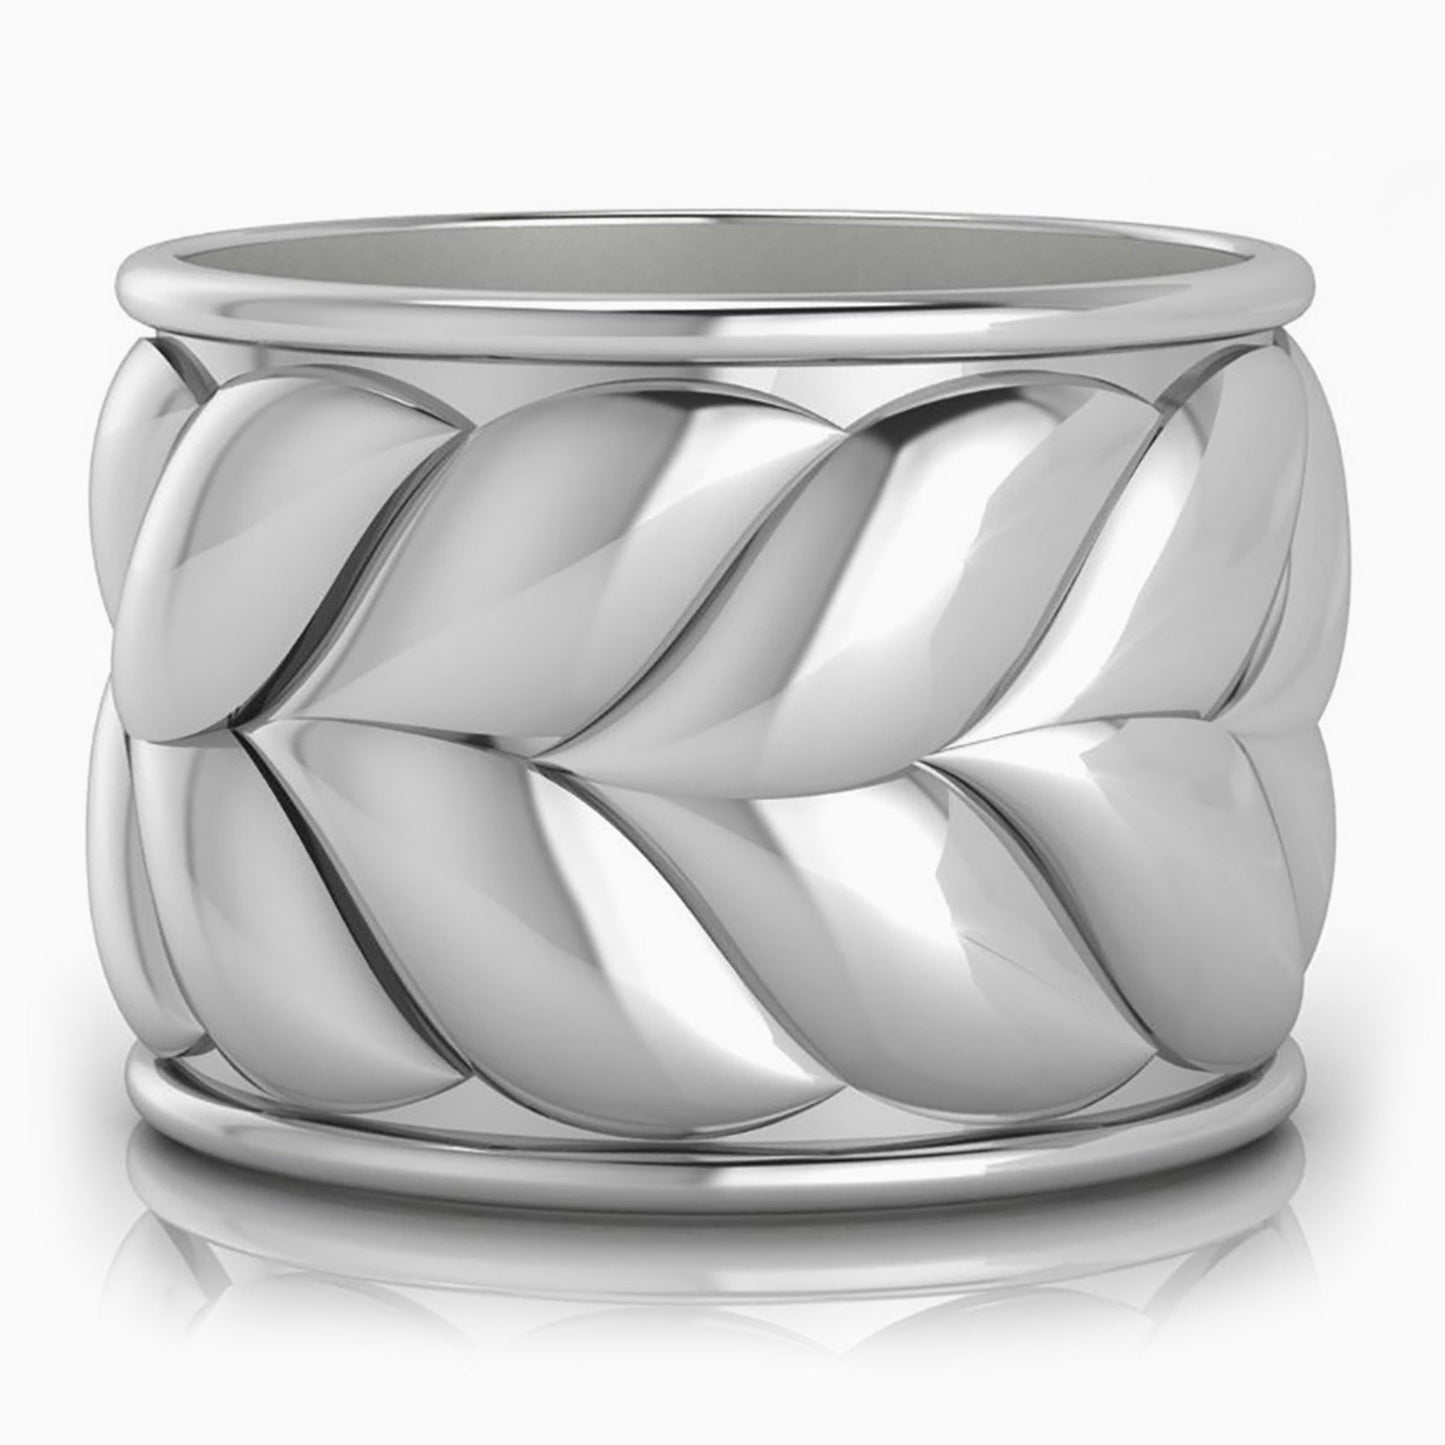 Entwine Silver-plate Napkin Rings by Krysaliis - Set of 4